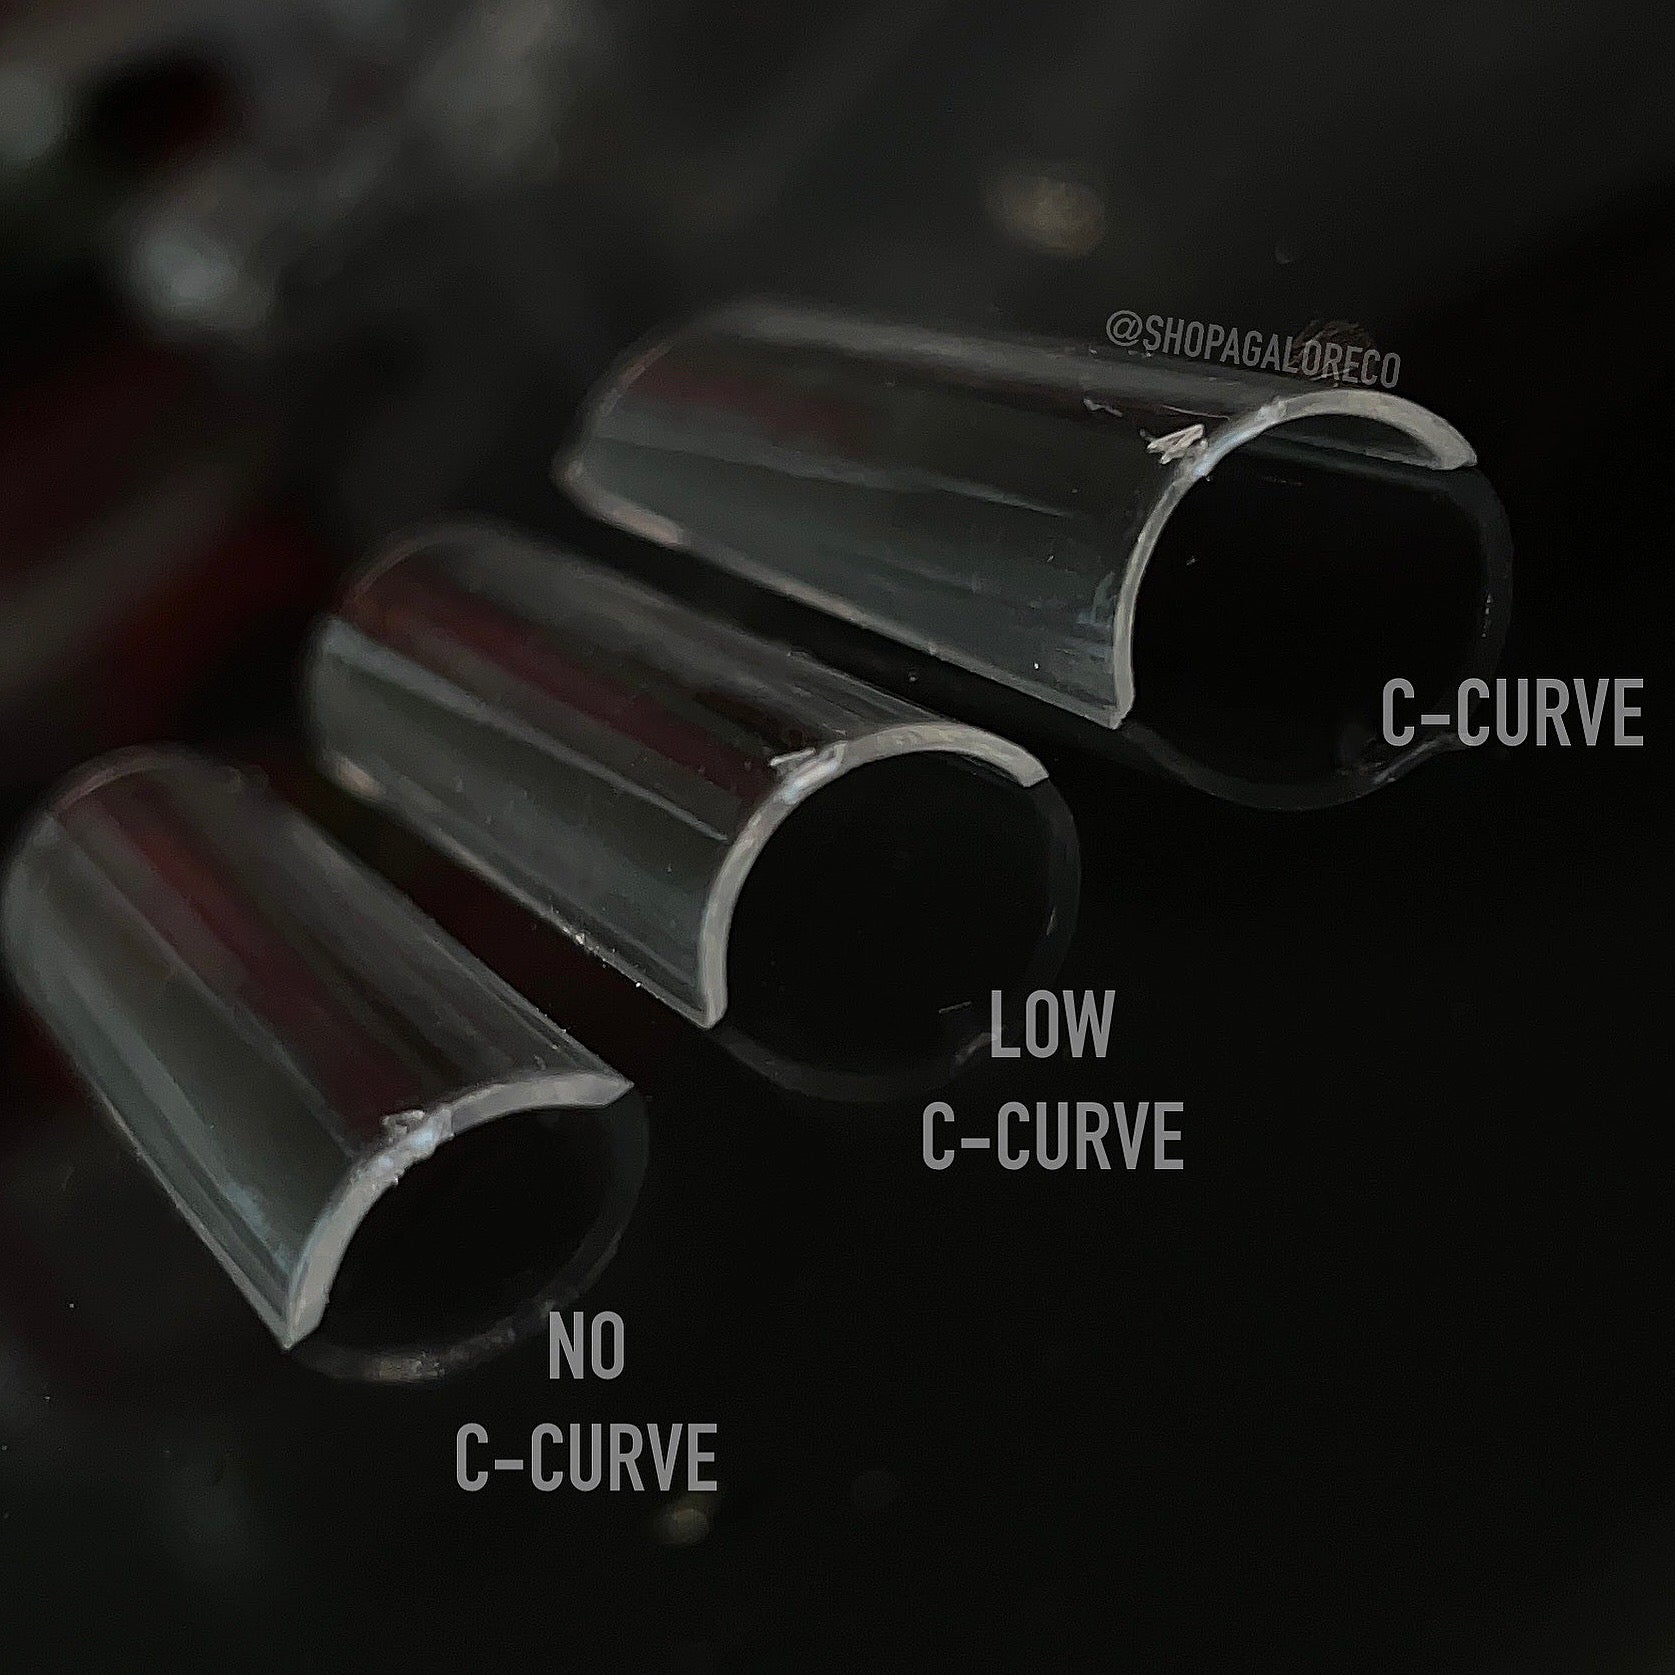 XXL LOW C-CURVE SQUARE tips A’GALORE & CO.